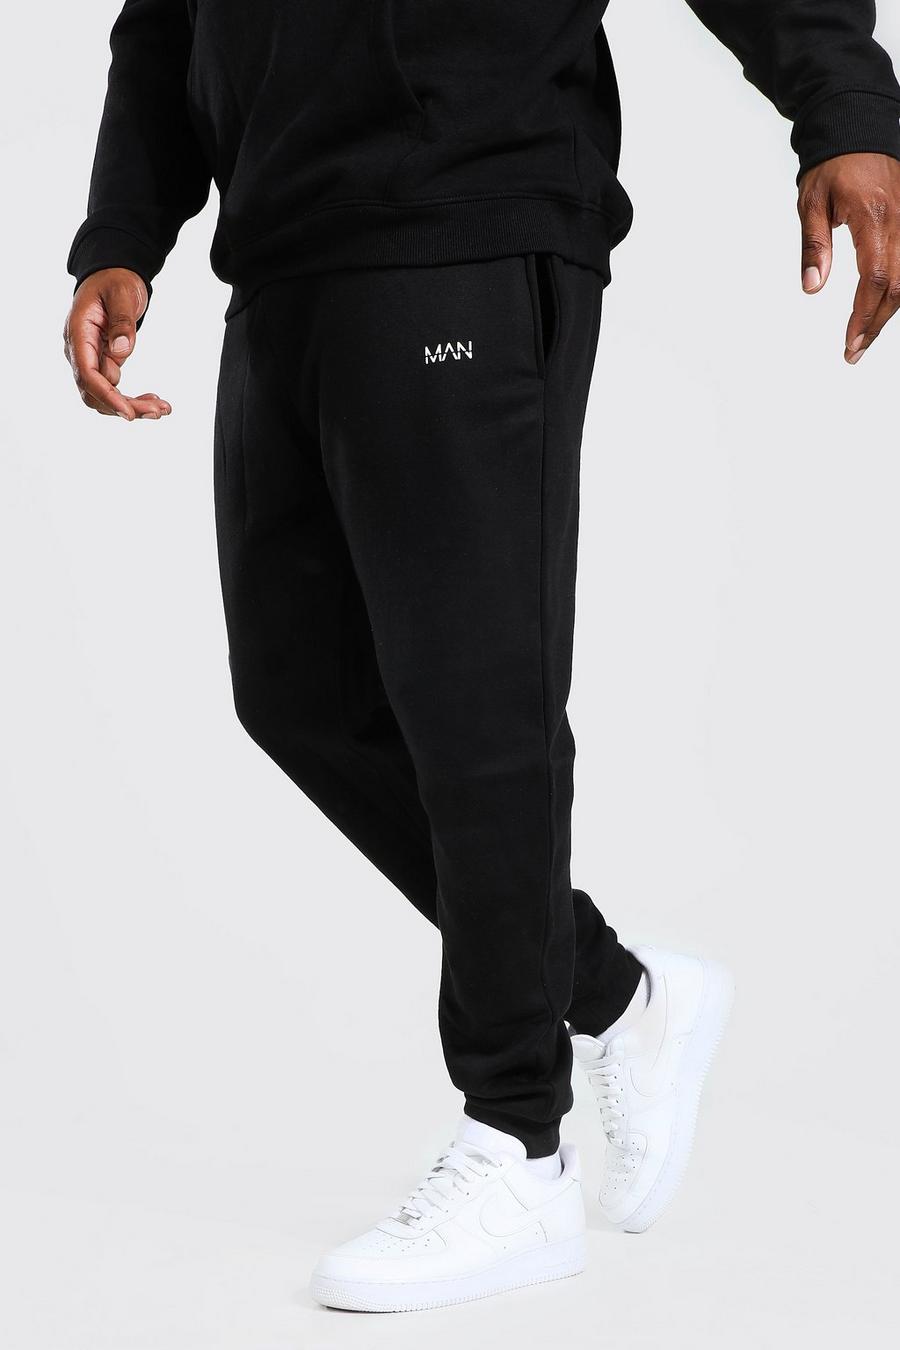 Pantalón deportivo Plus MAN ajustado reciclado, Black negro image number 1